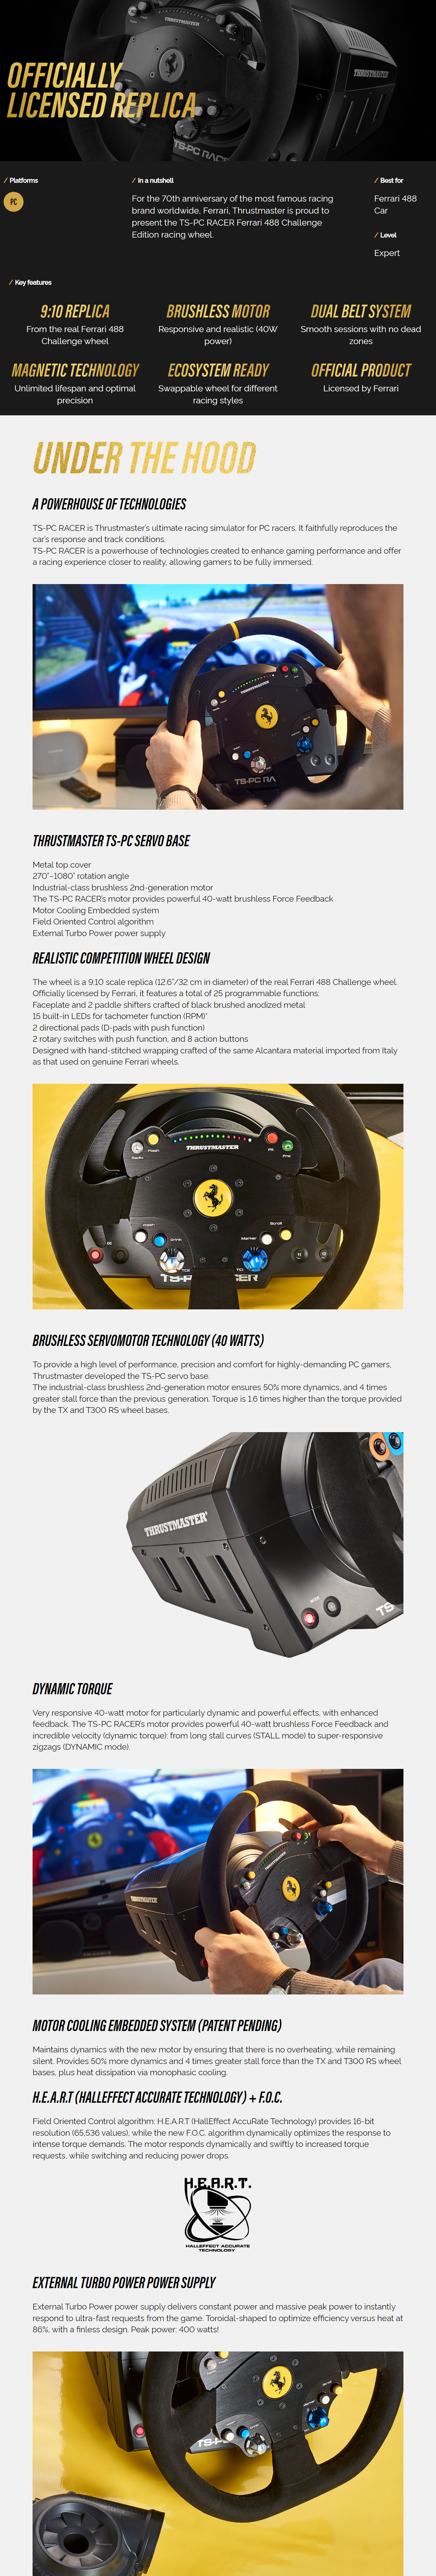 Racing-Wheels-Thrustmaster-TS-PC-488-Challenge-Edition-Racing-Wheel-1